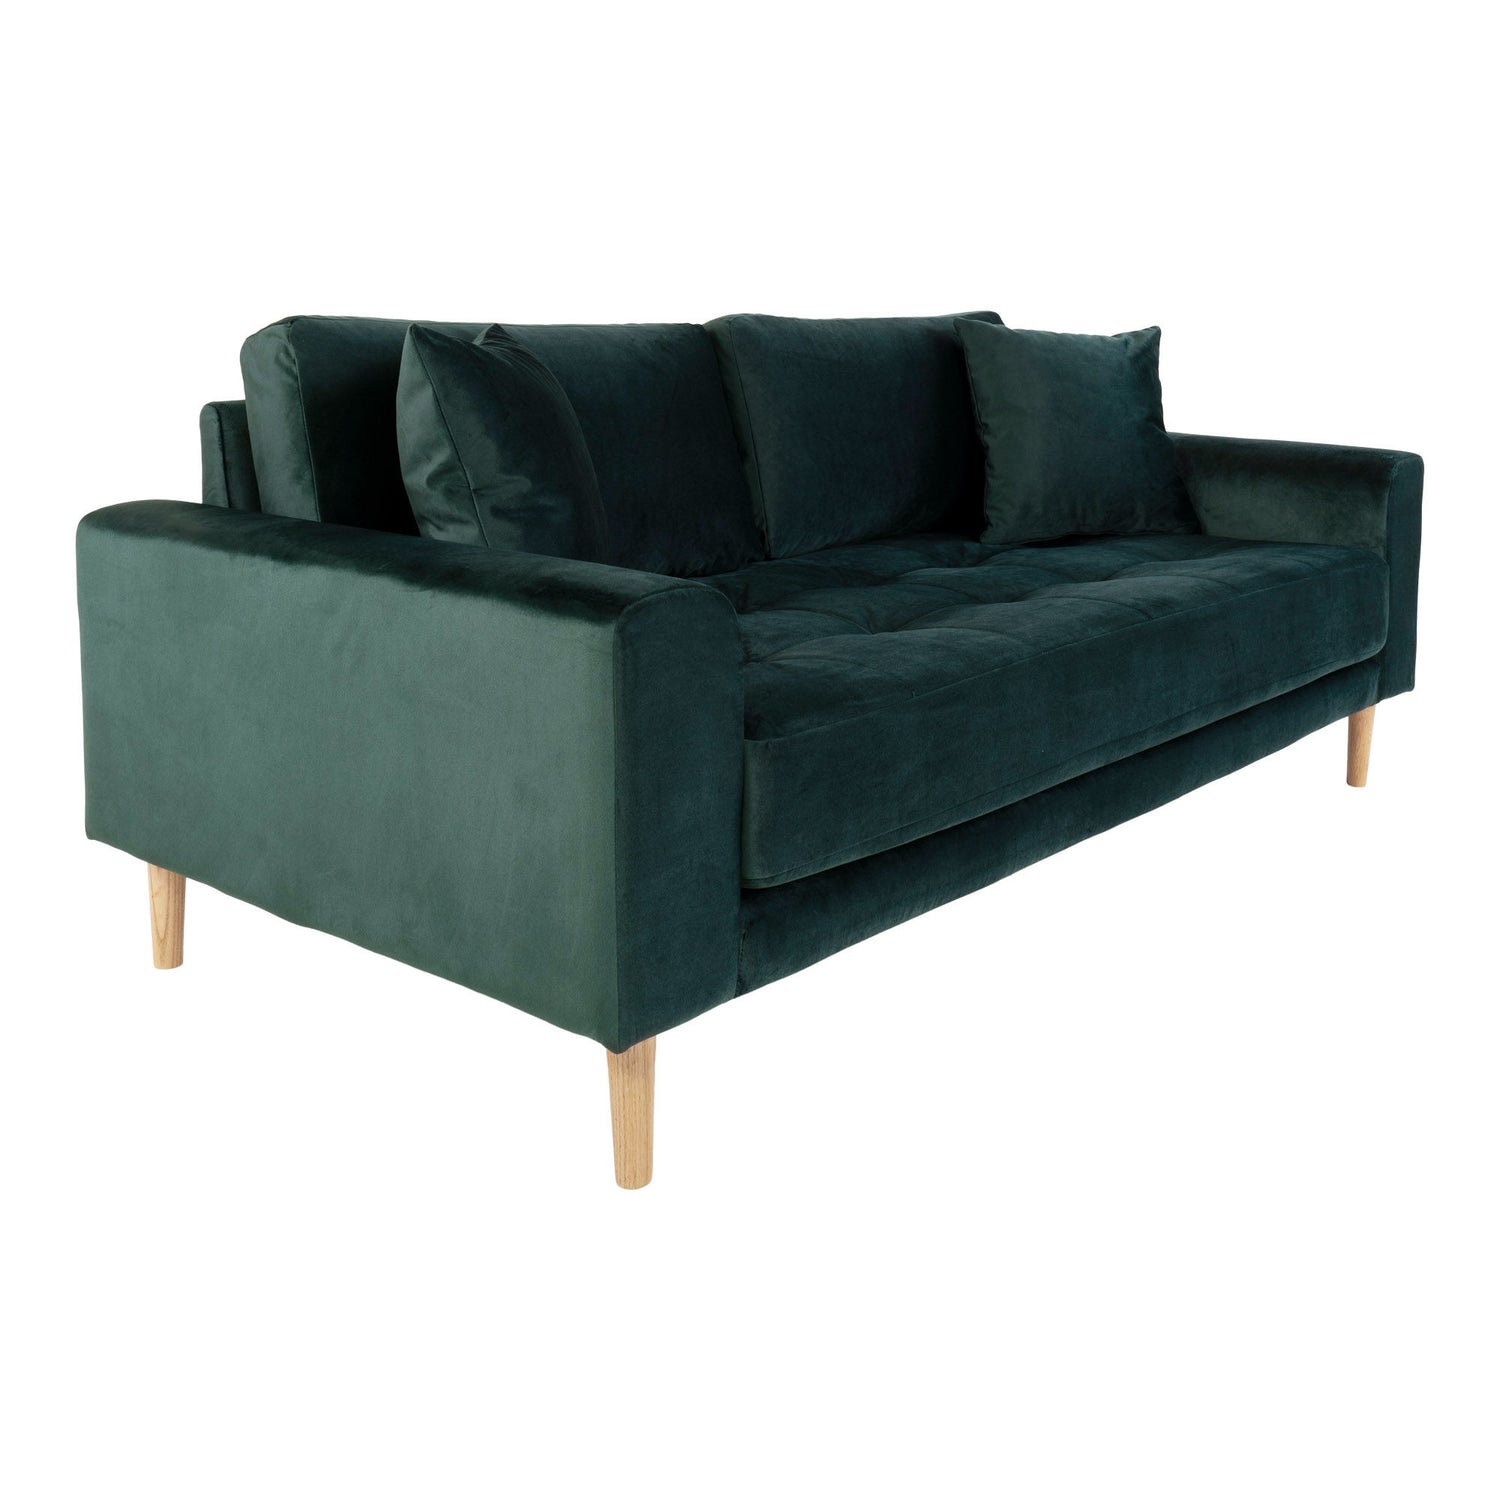 House Nordic - Lido 2.5 -person sofa